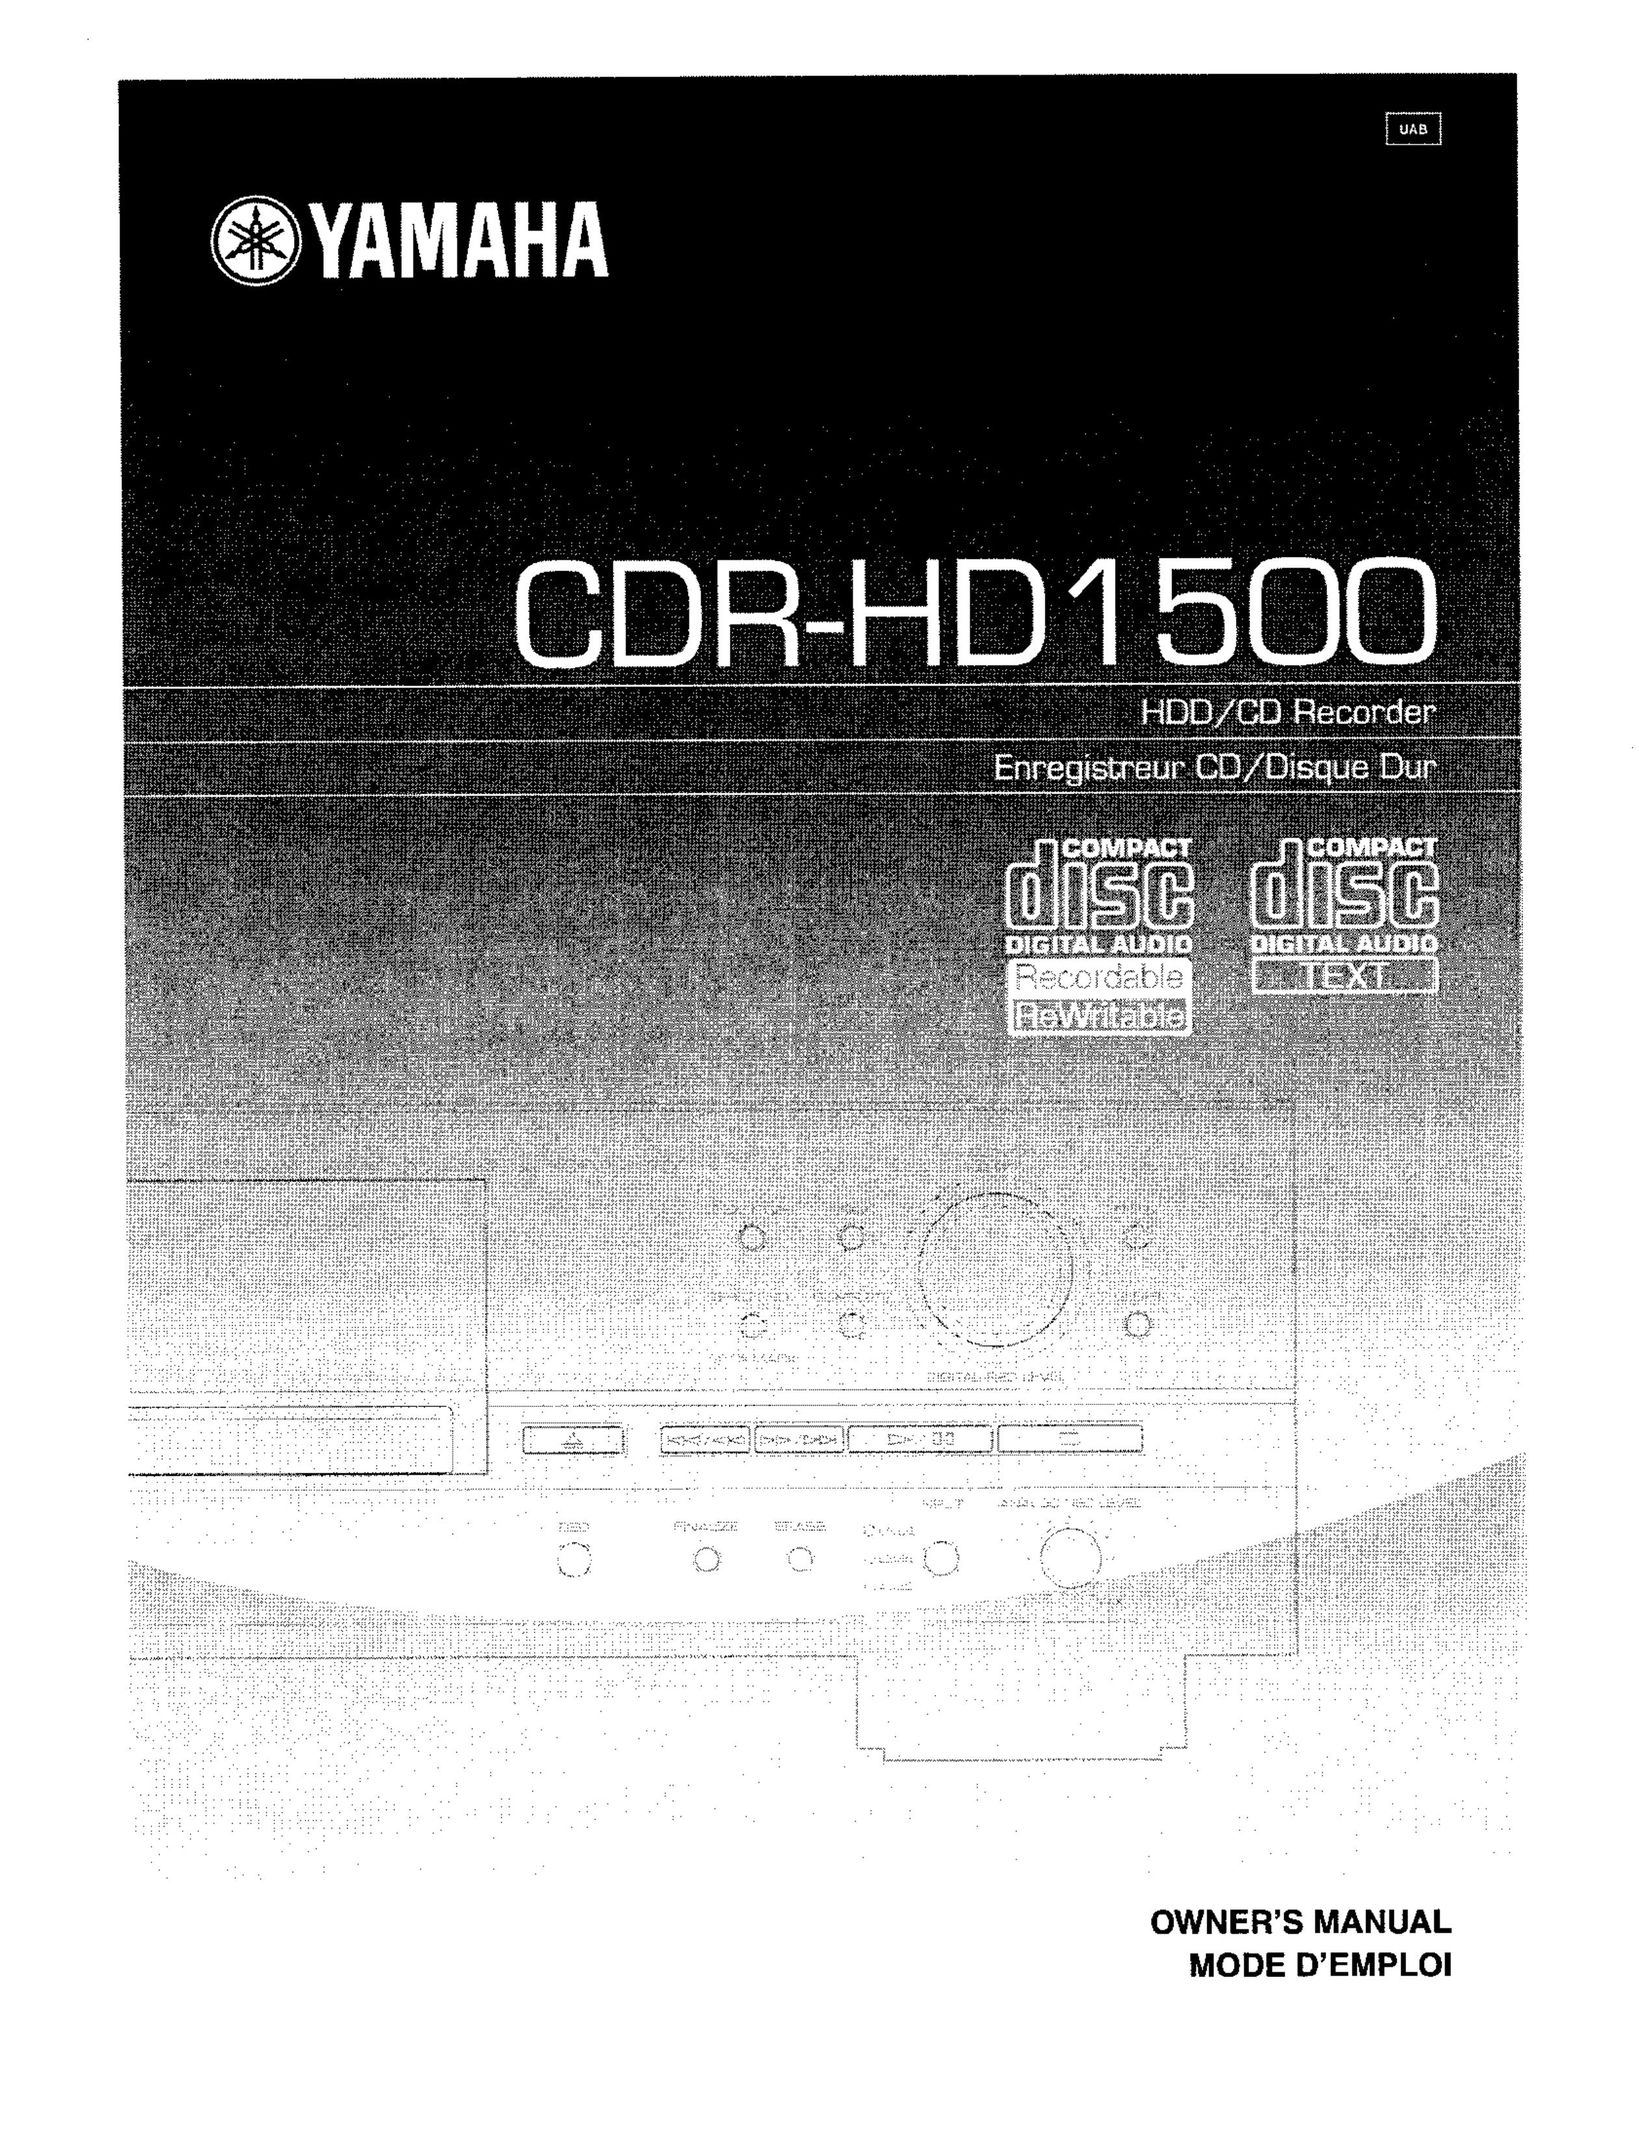 Yamaha CDR-HD1500 MP3 Player User Manual